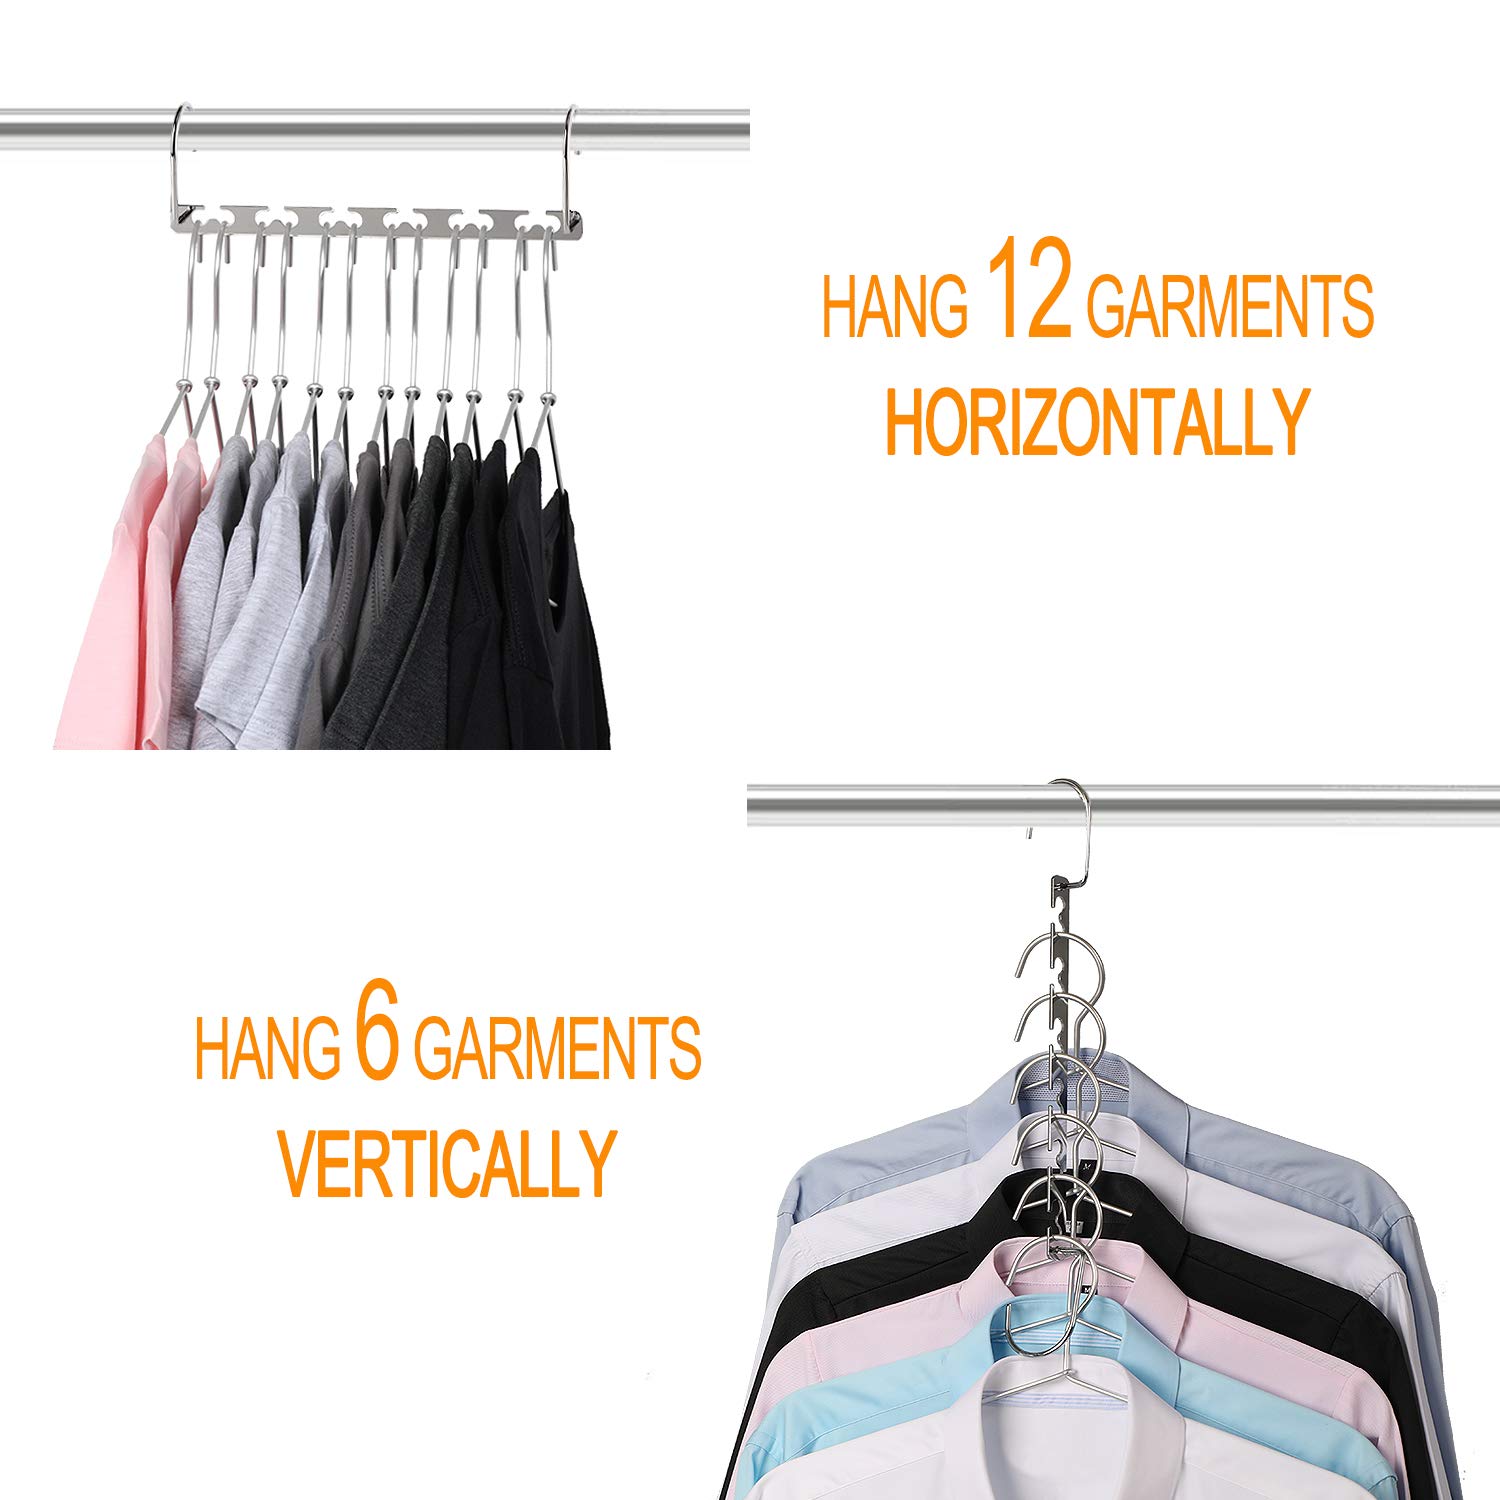 GEFTOL Space Saving Hangers Metal Hanger Magic Cascading Hanger Closet Clothes Organizer(4 Pack)